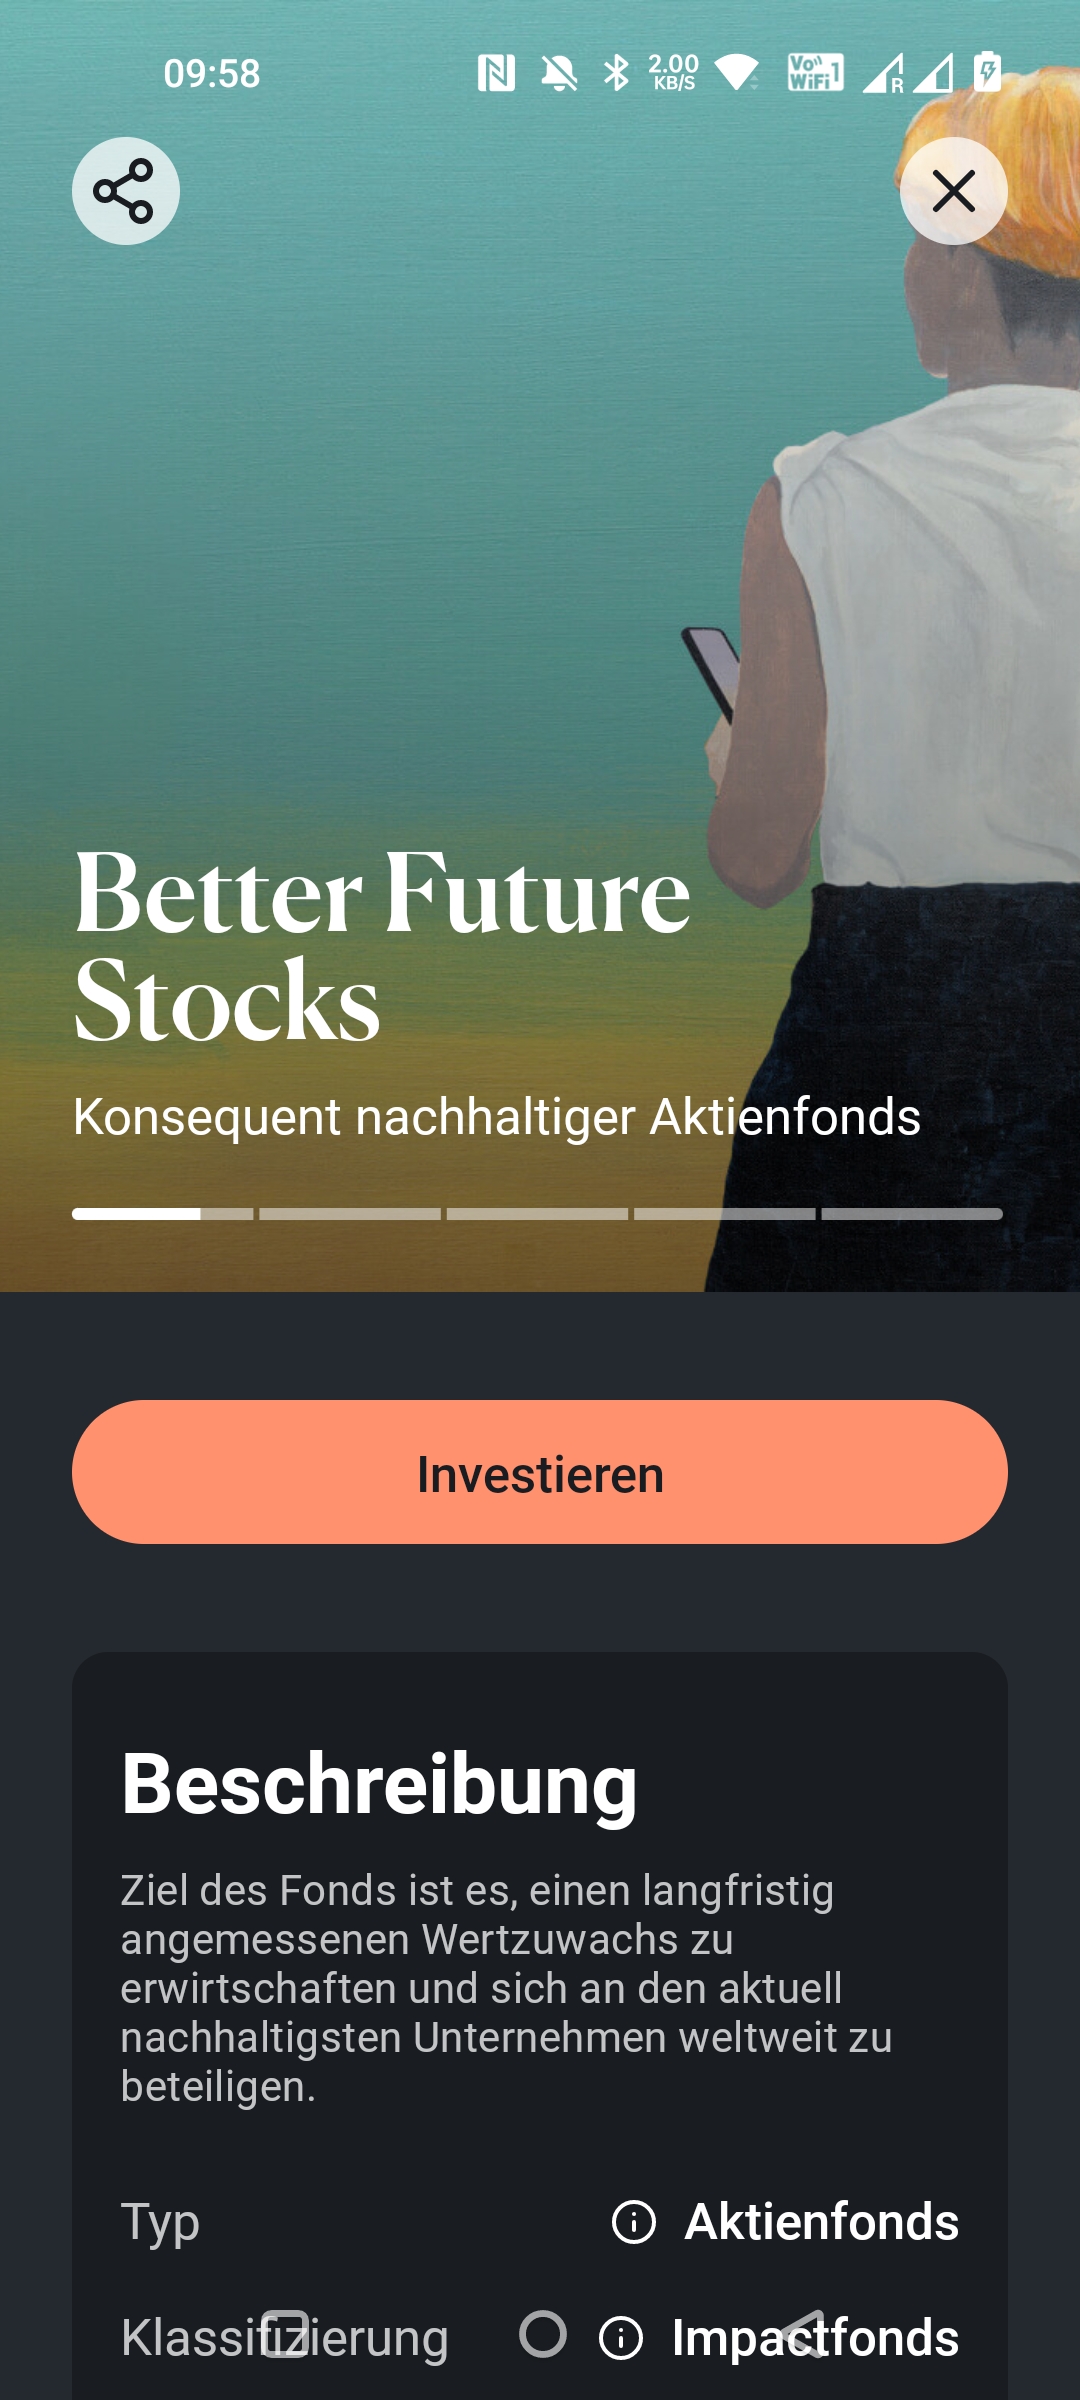 Informationen zum Tomorrow Better Future Stocks im Impact-Tab der App